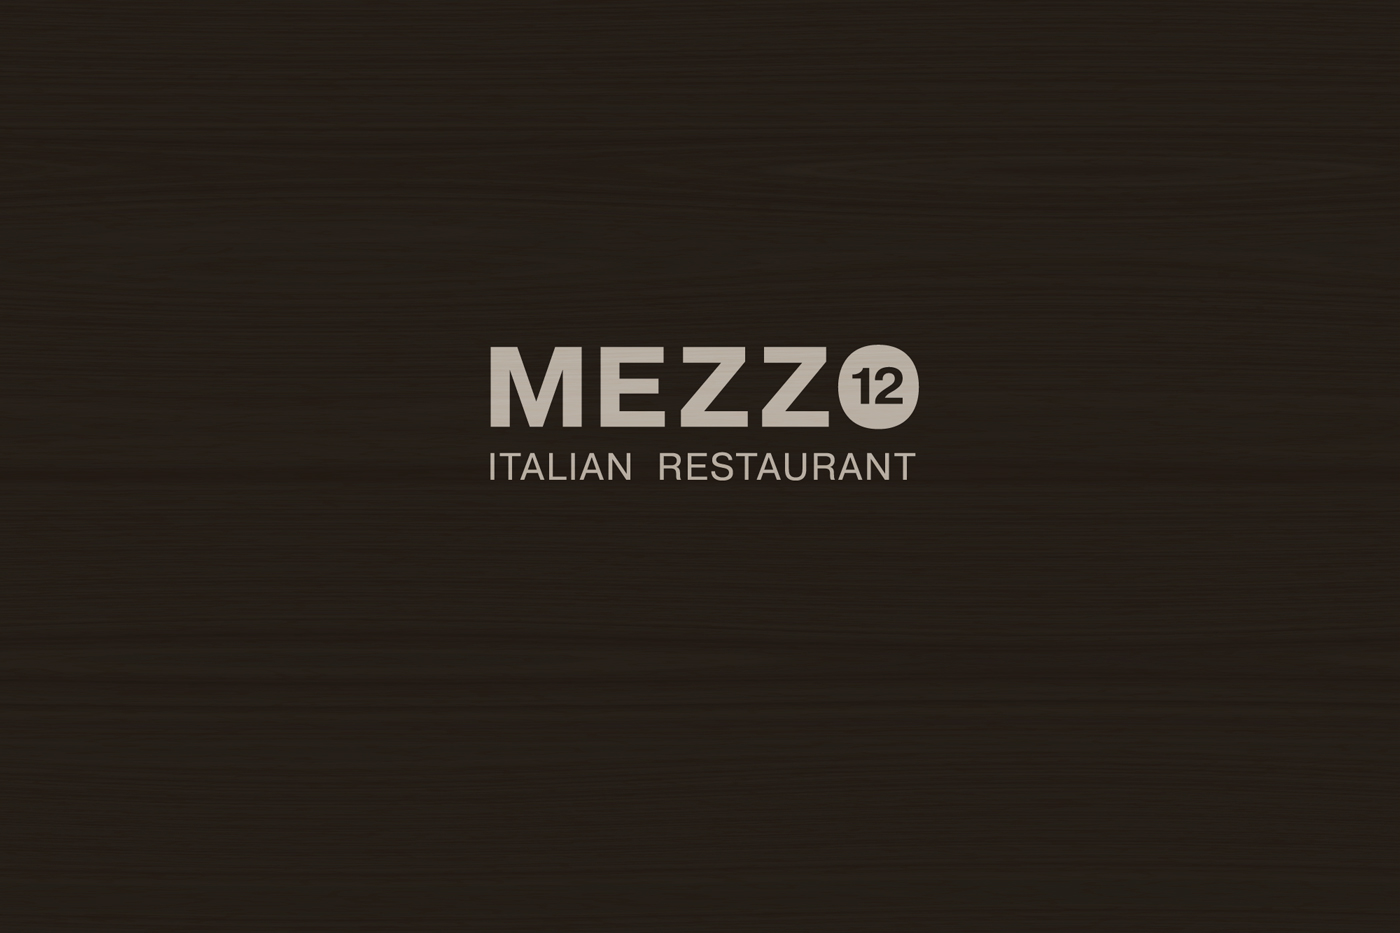 mezzo italian restaurant bar brown cooking restaurant MEZZO 12 brand design menu card Food  Label Moldova Kishinev